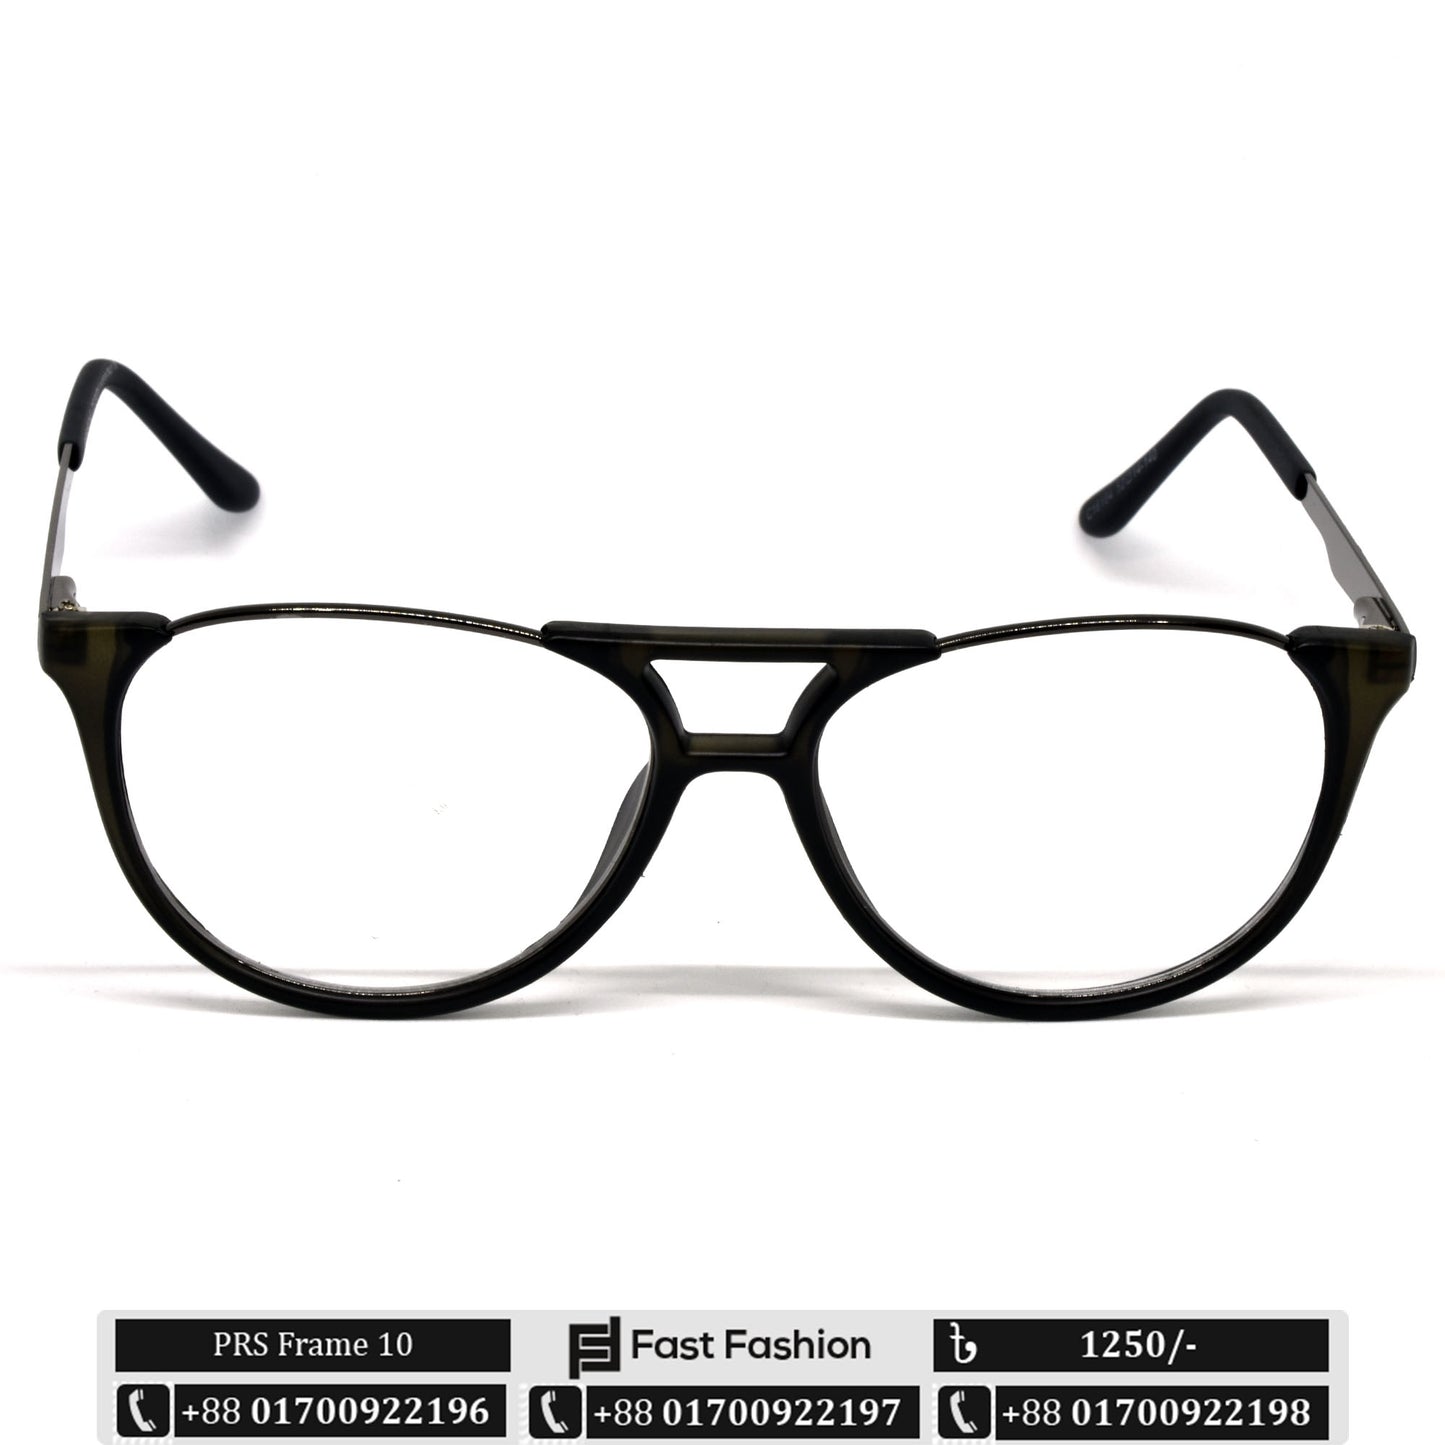 Trendy Stylish Optic Frame | PRS Frame 10 | Premium Quality